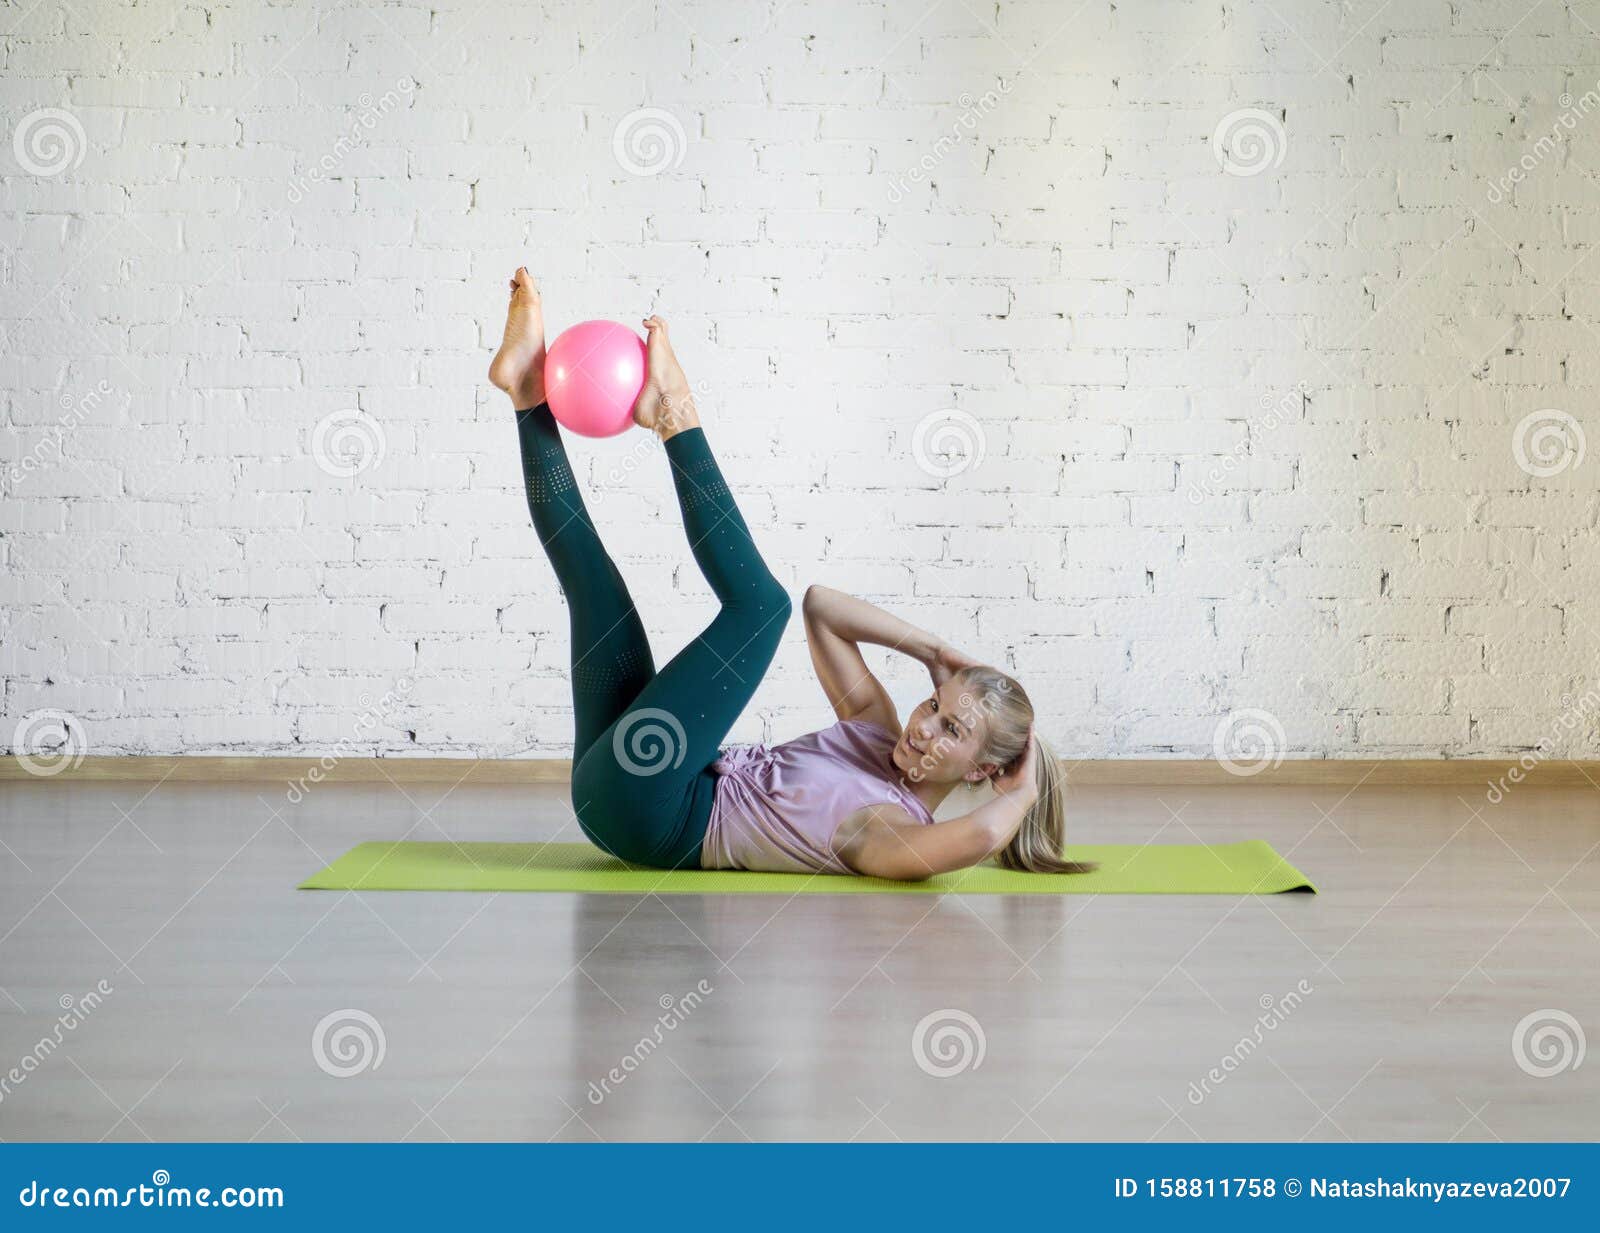 yoga with small ball